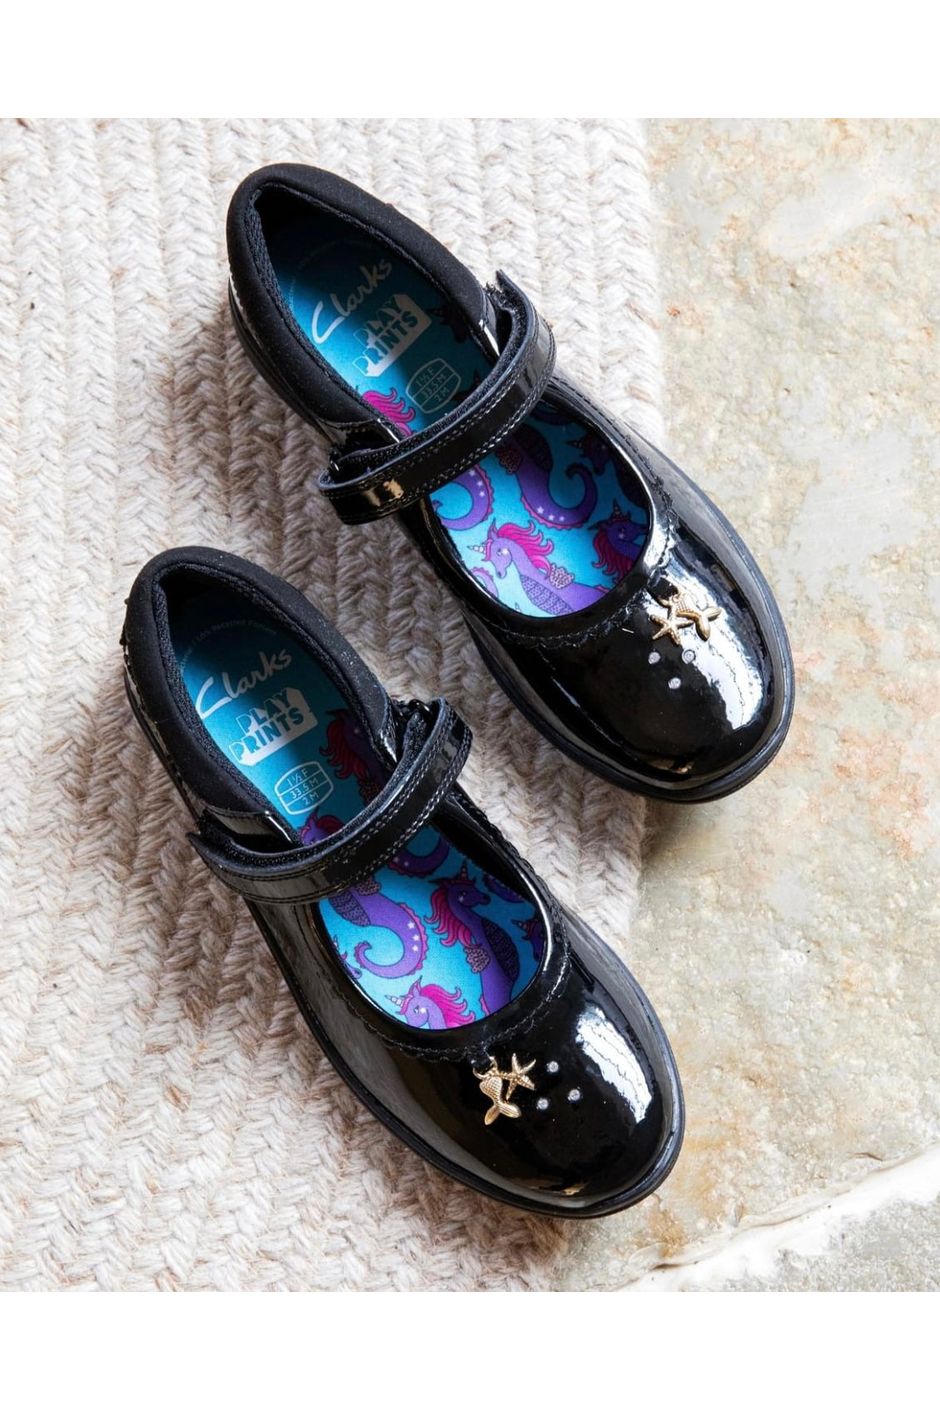 Clarks Relda Sea black patent Girls school shoe